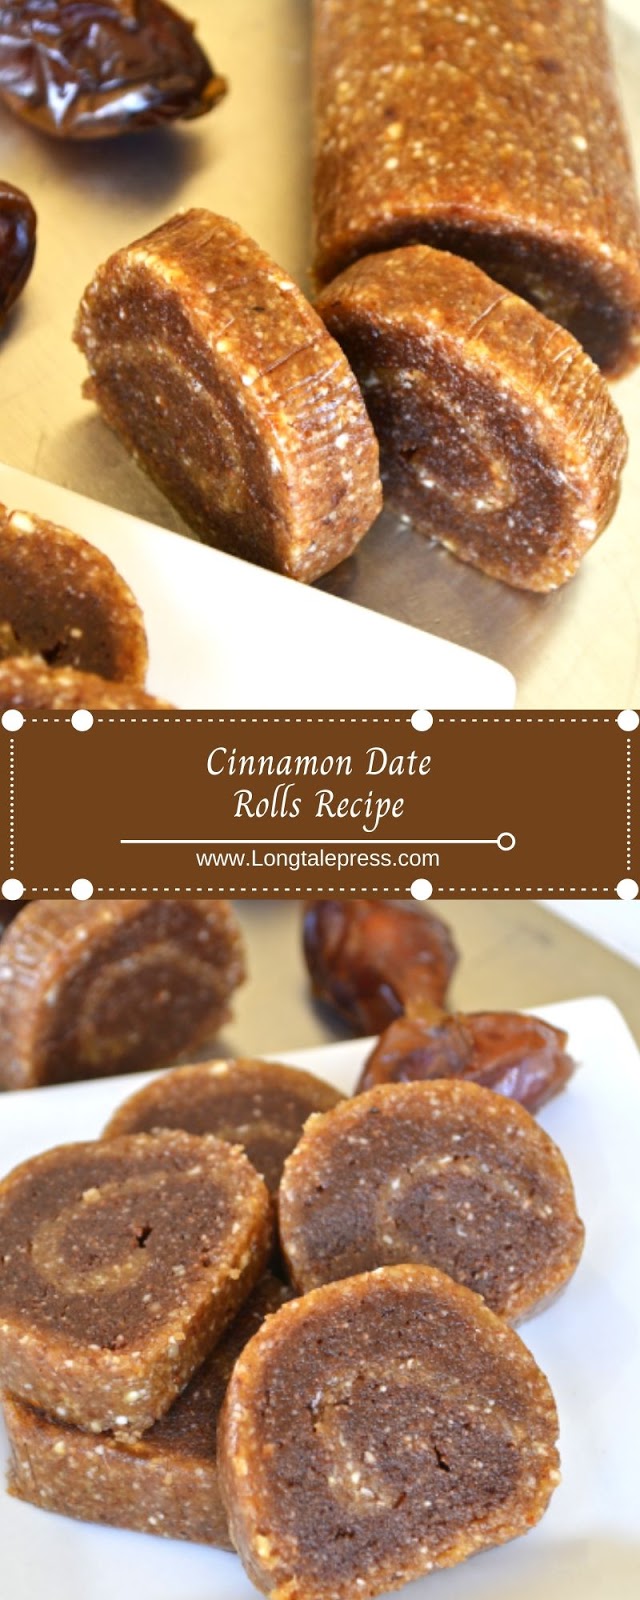 Cinnamon Date Rolls Recipe